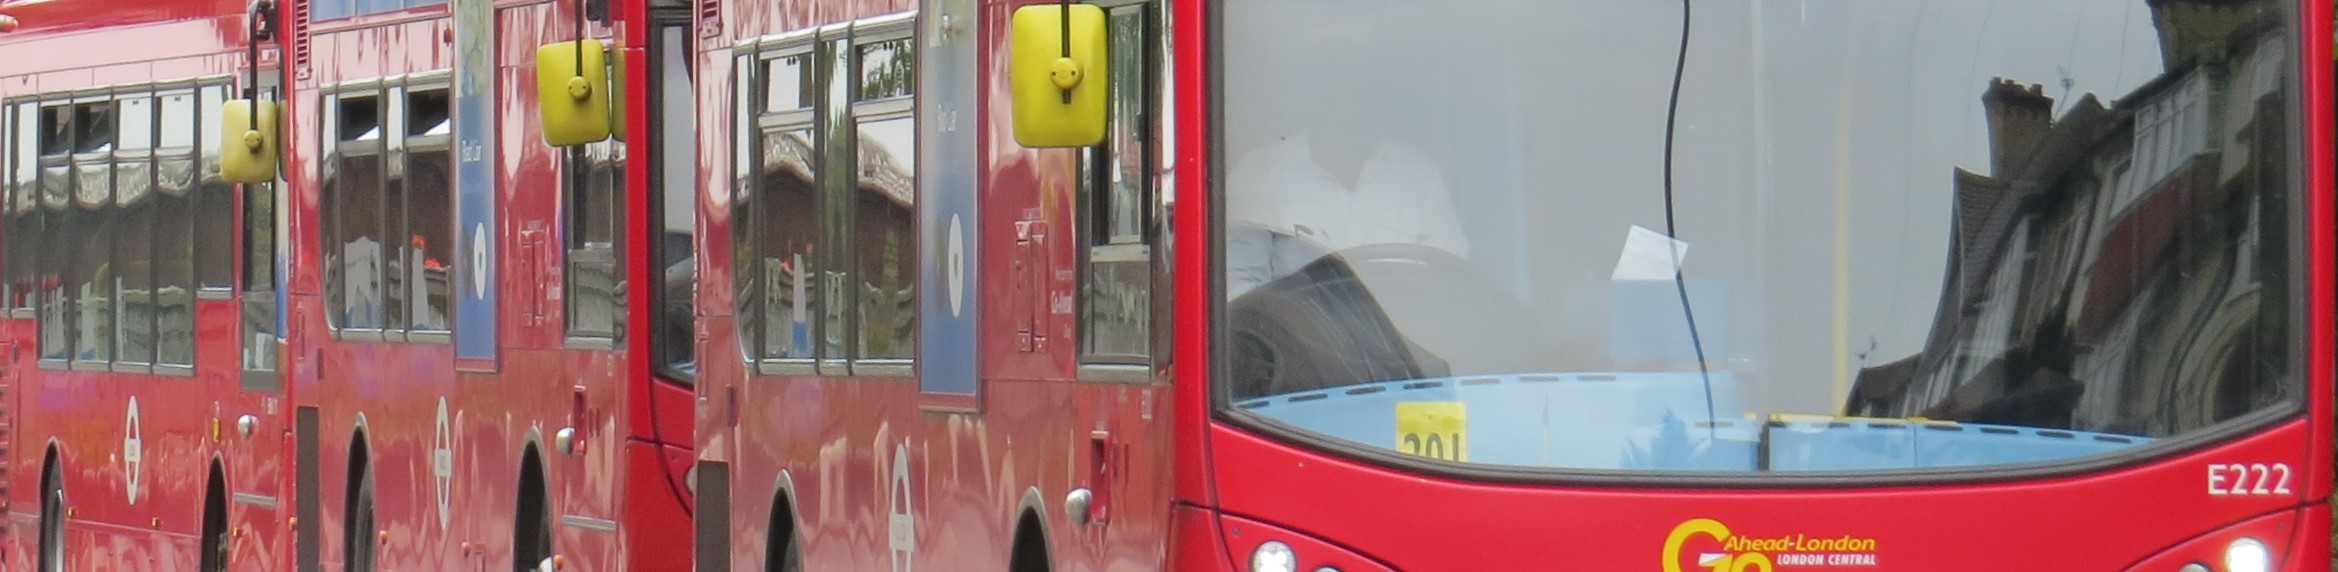 London buses Stepney in London